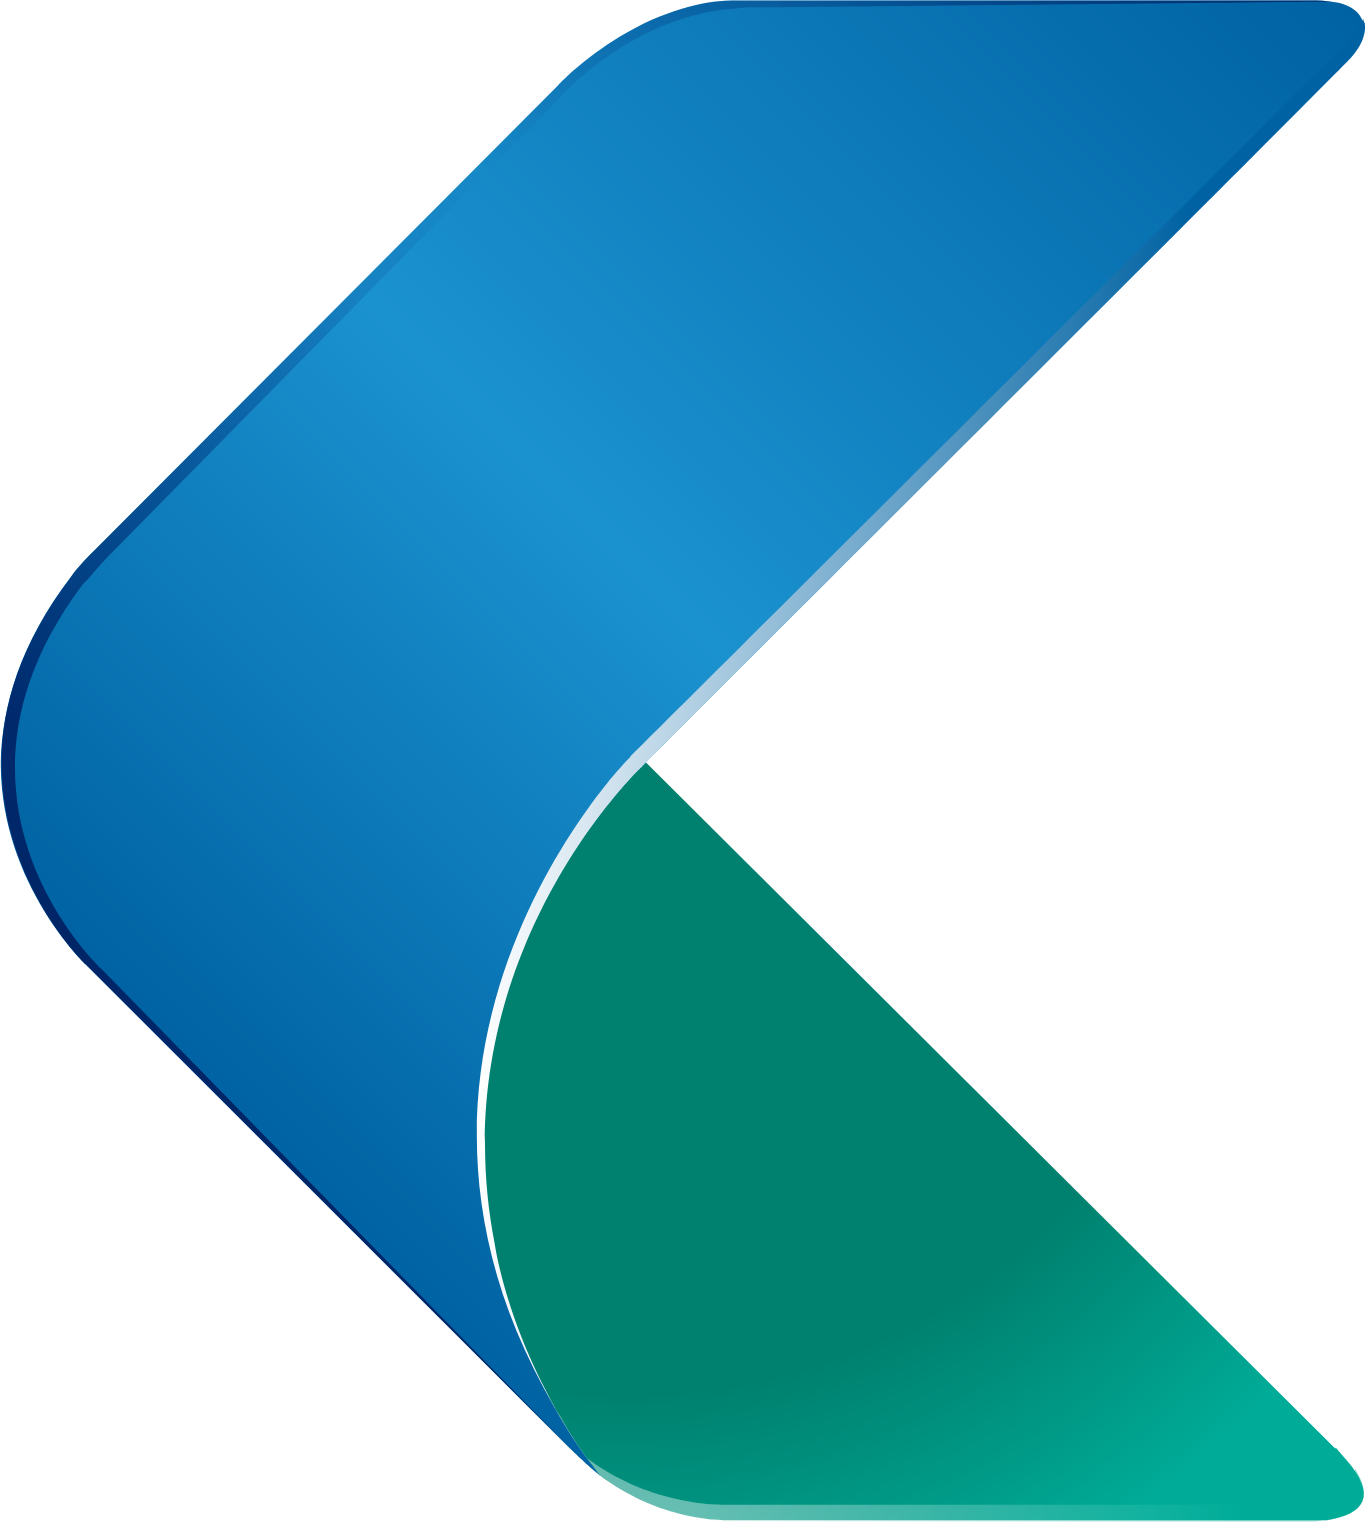 Kuwait International Bank logo (transparent PNG)